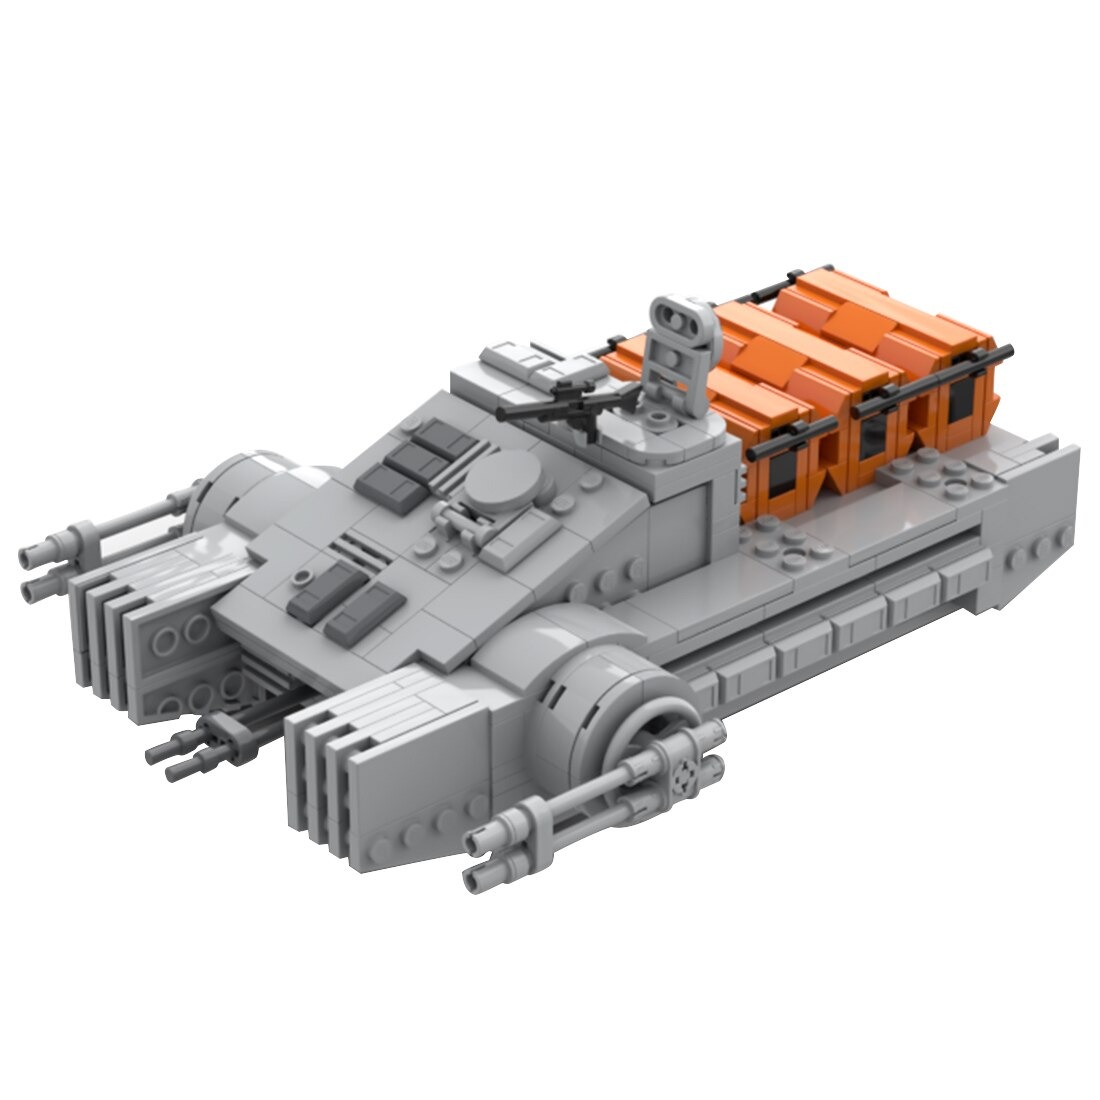 Hovertank Tx-225 Gavw “Occupier” Star Wars Moc-87839 By Brick_Boss_Pdf With  539 Pieces - Moc Brick Land